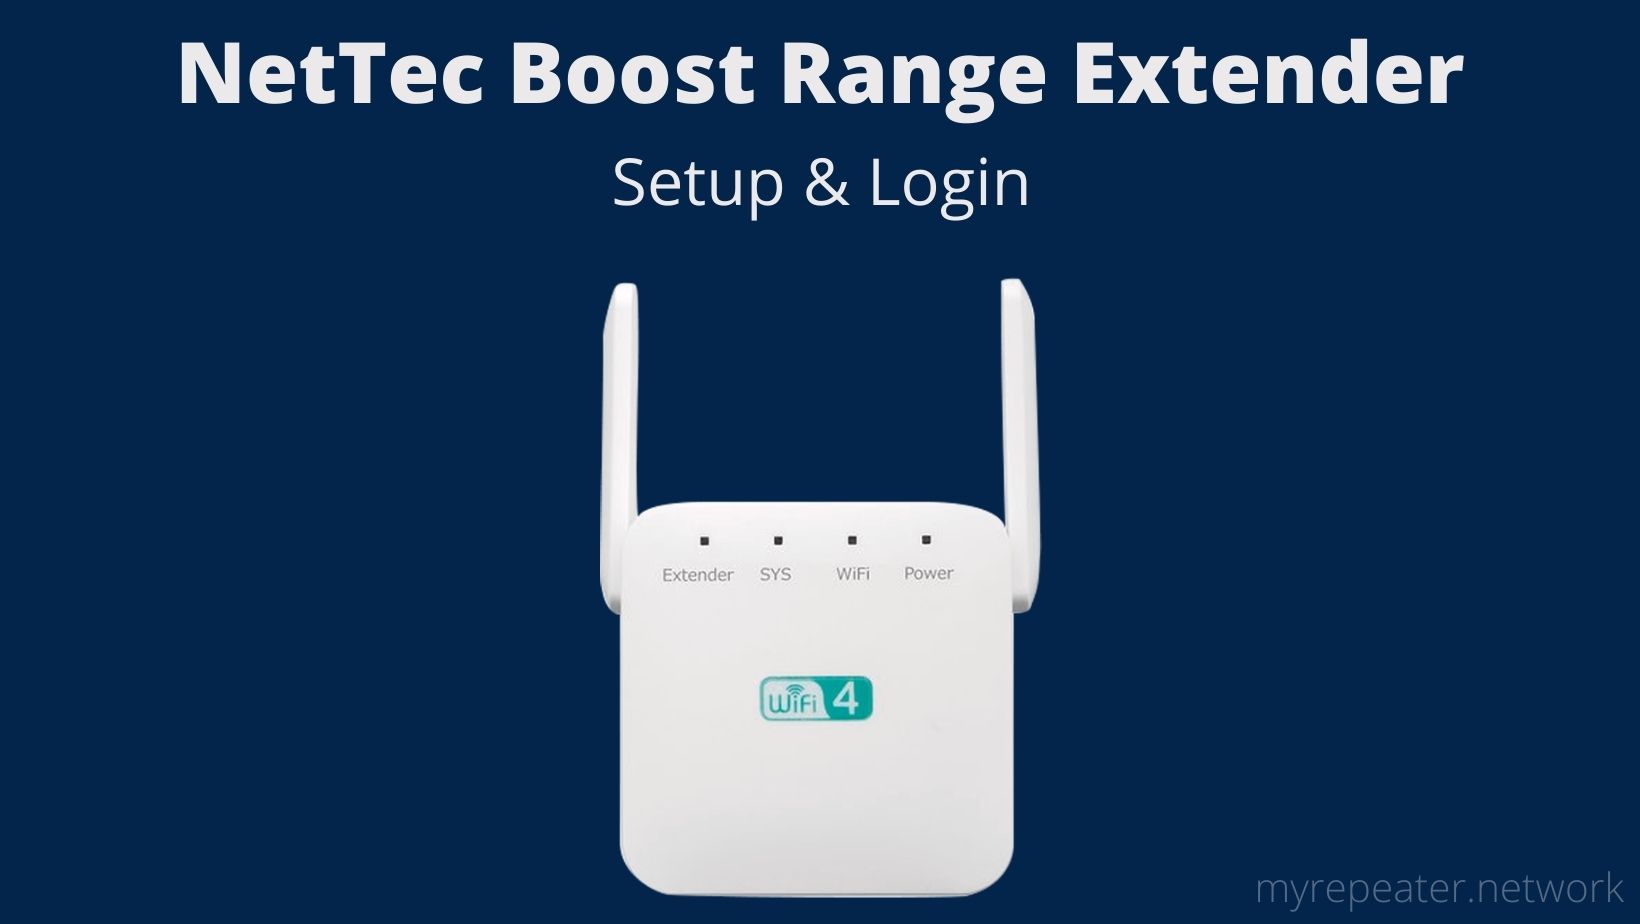 How To Setup And Login NetTec Boost Range Extender